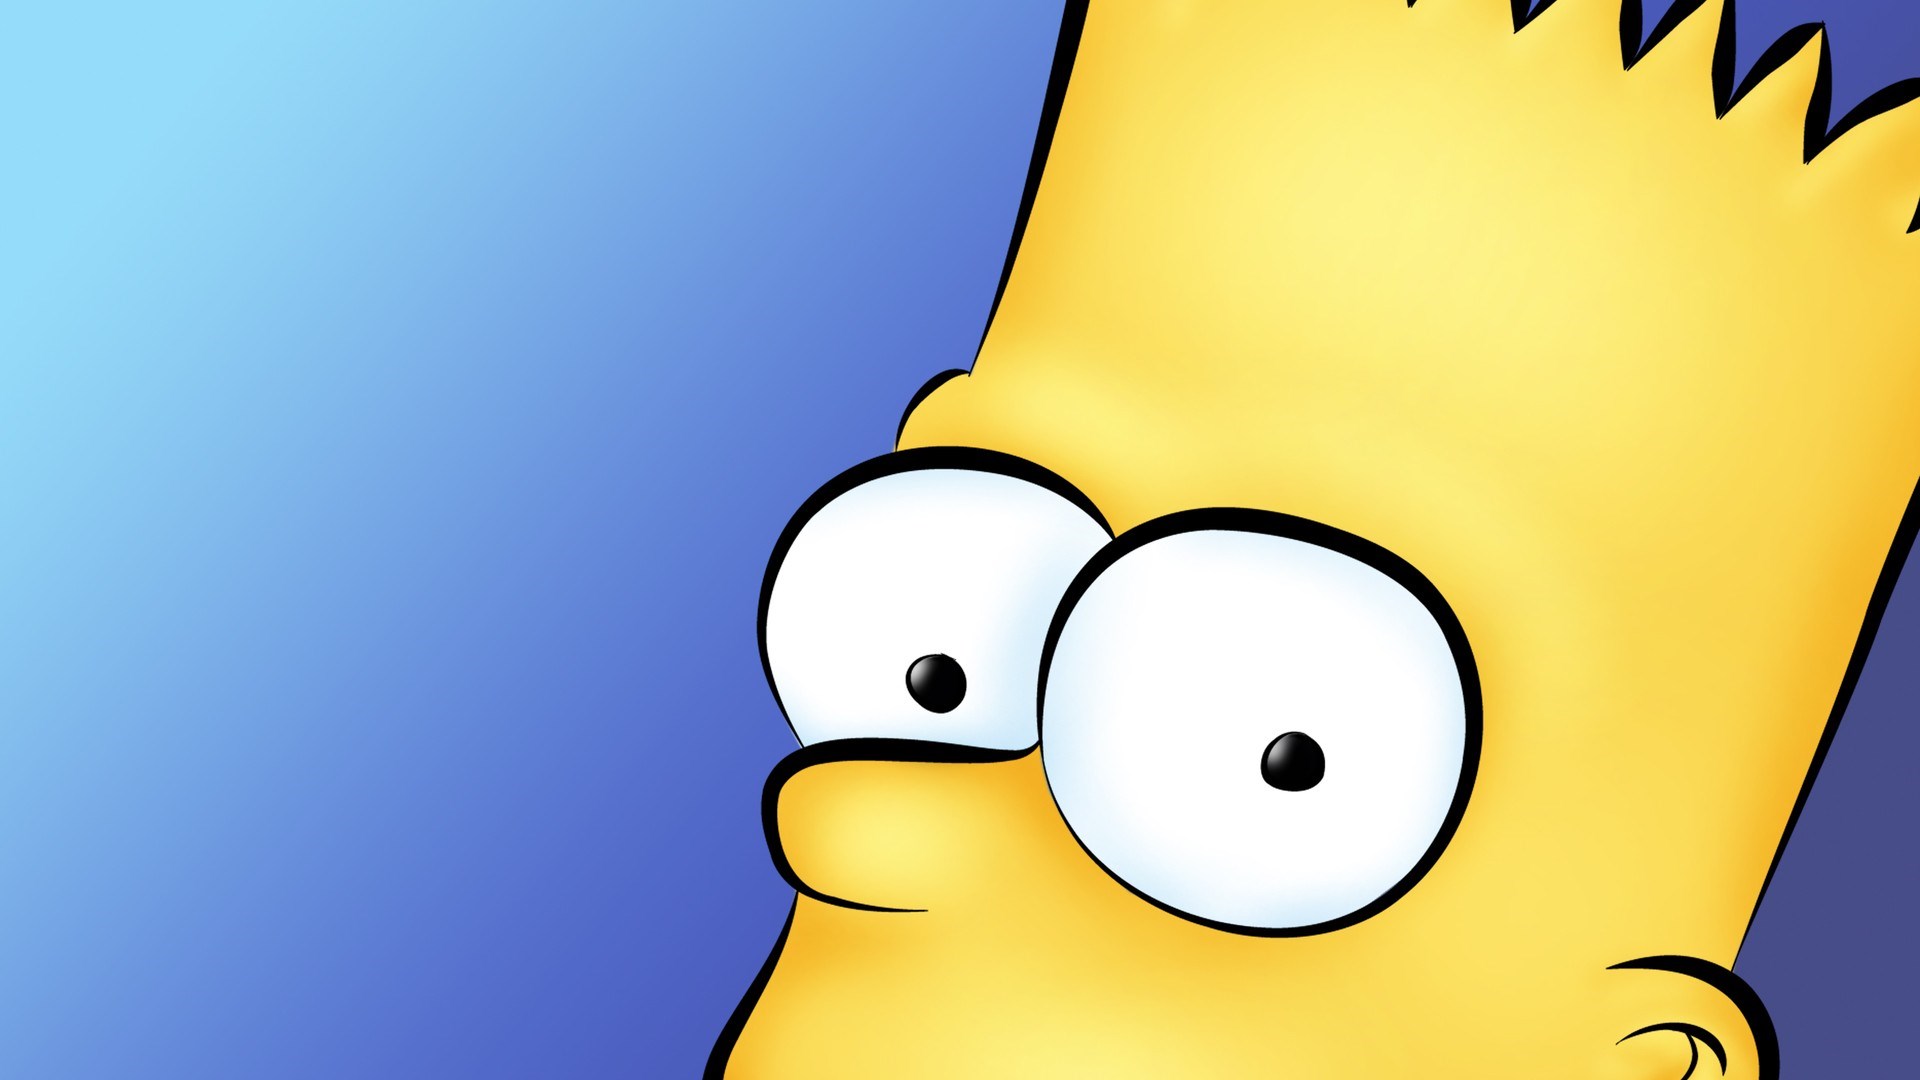 The Simpsons Bart Simpson Cartoon wallpaper | 1920x1080 | #9690